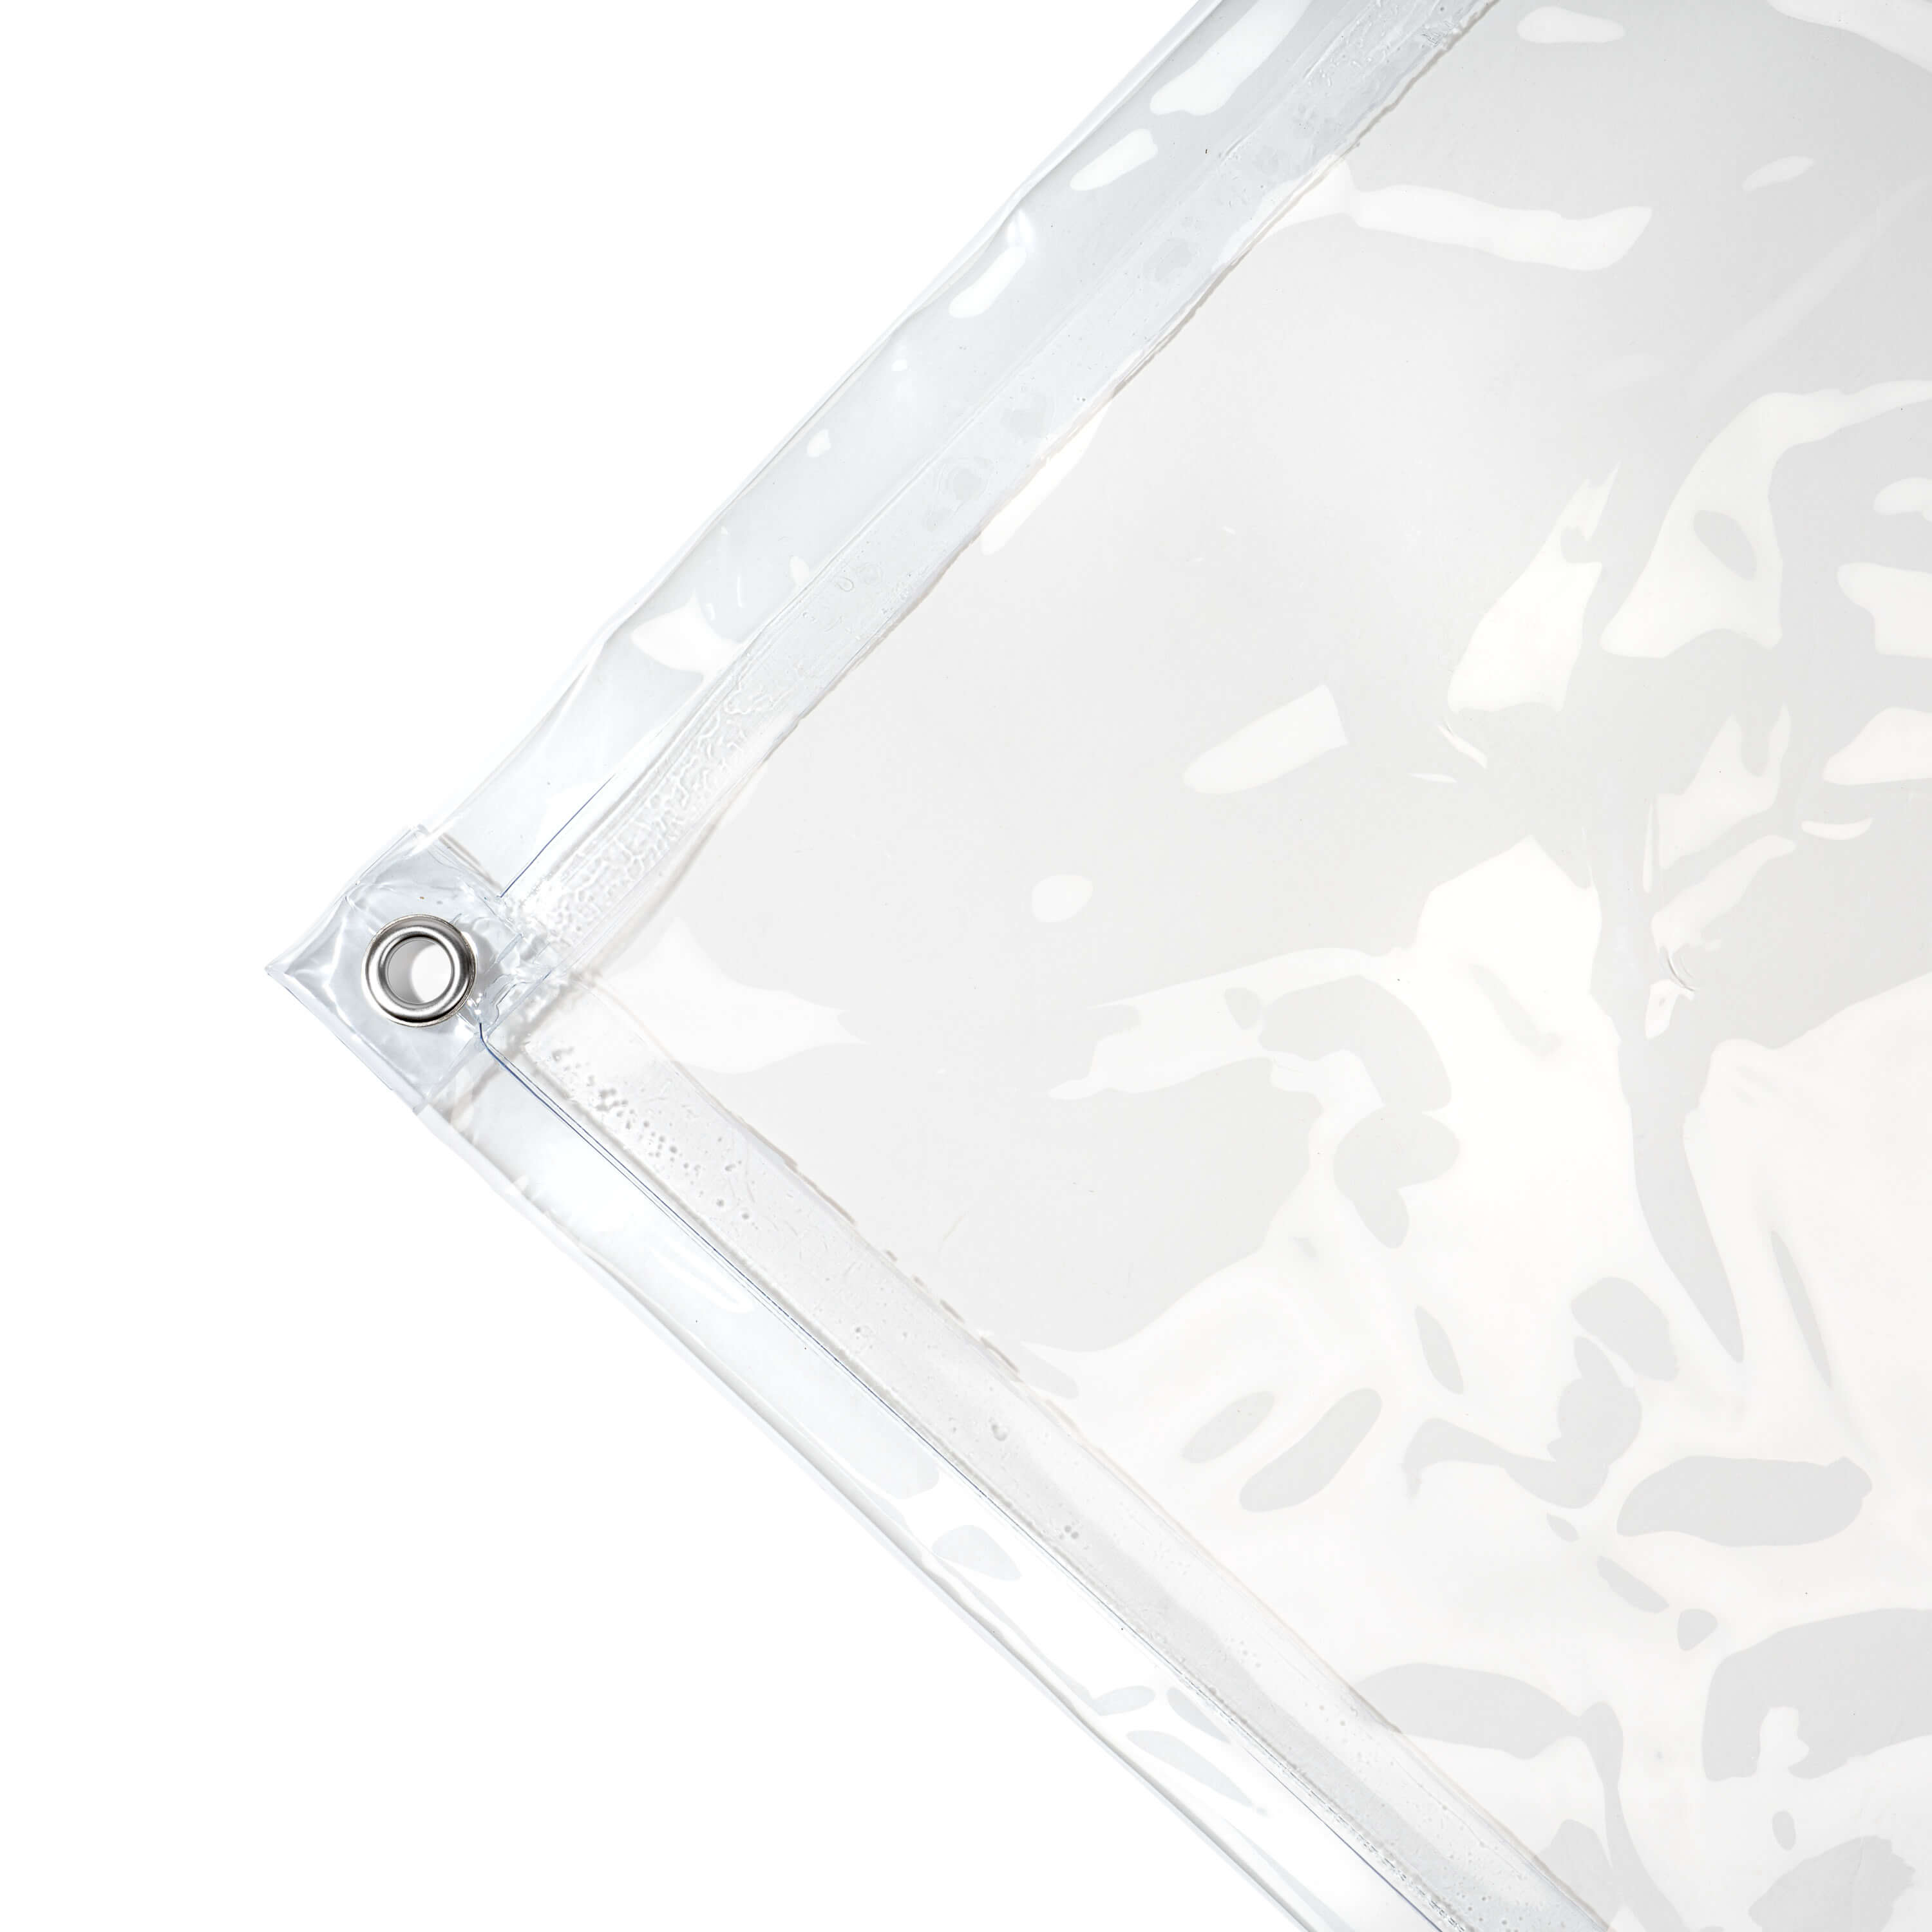 Telo crystal trasparente copertura gazebi, tettoie - Cod. TTCRY-17T